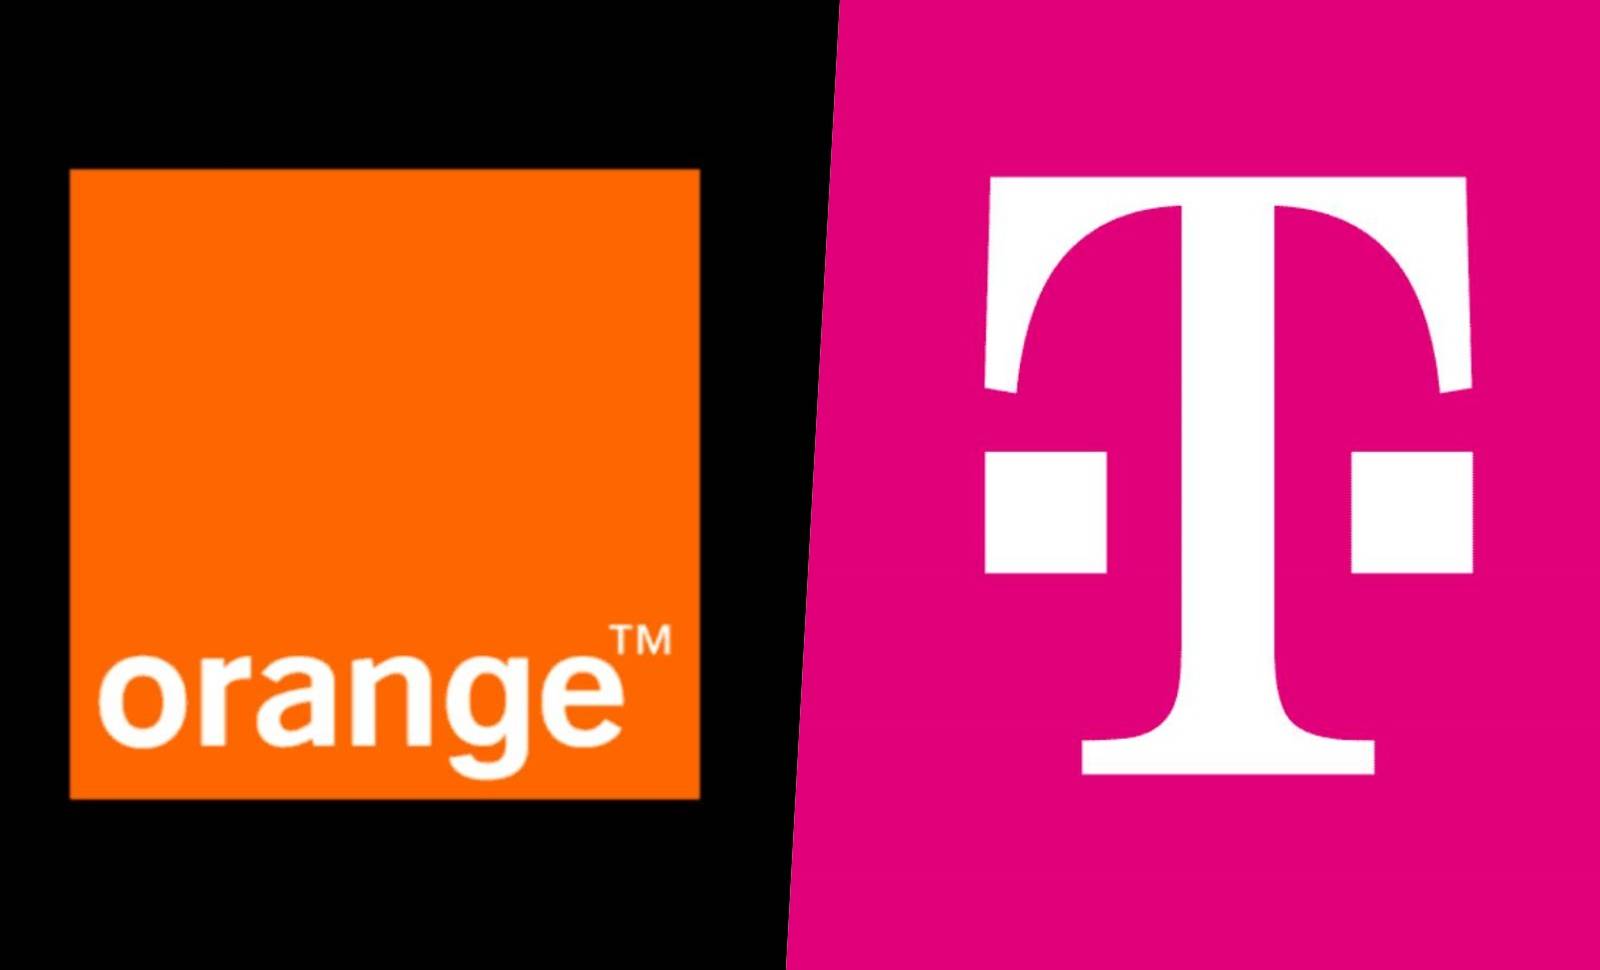 Telekom Orange merger